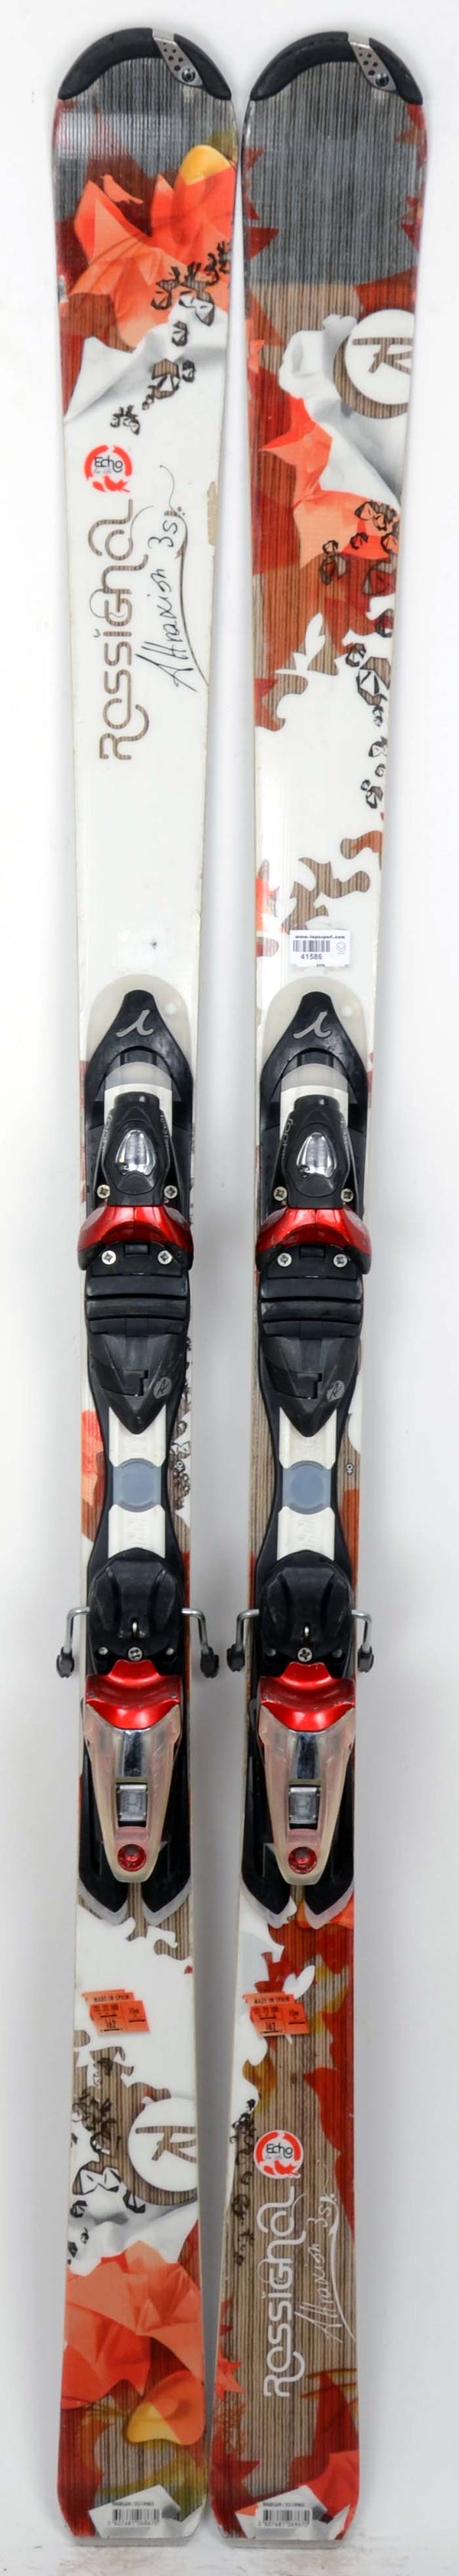 Rossignol ATTRAXION 3 S ECHO - skis d'occasion Femme